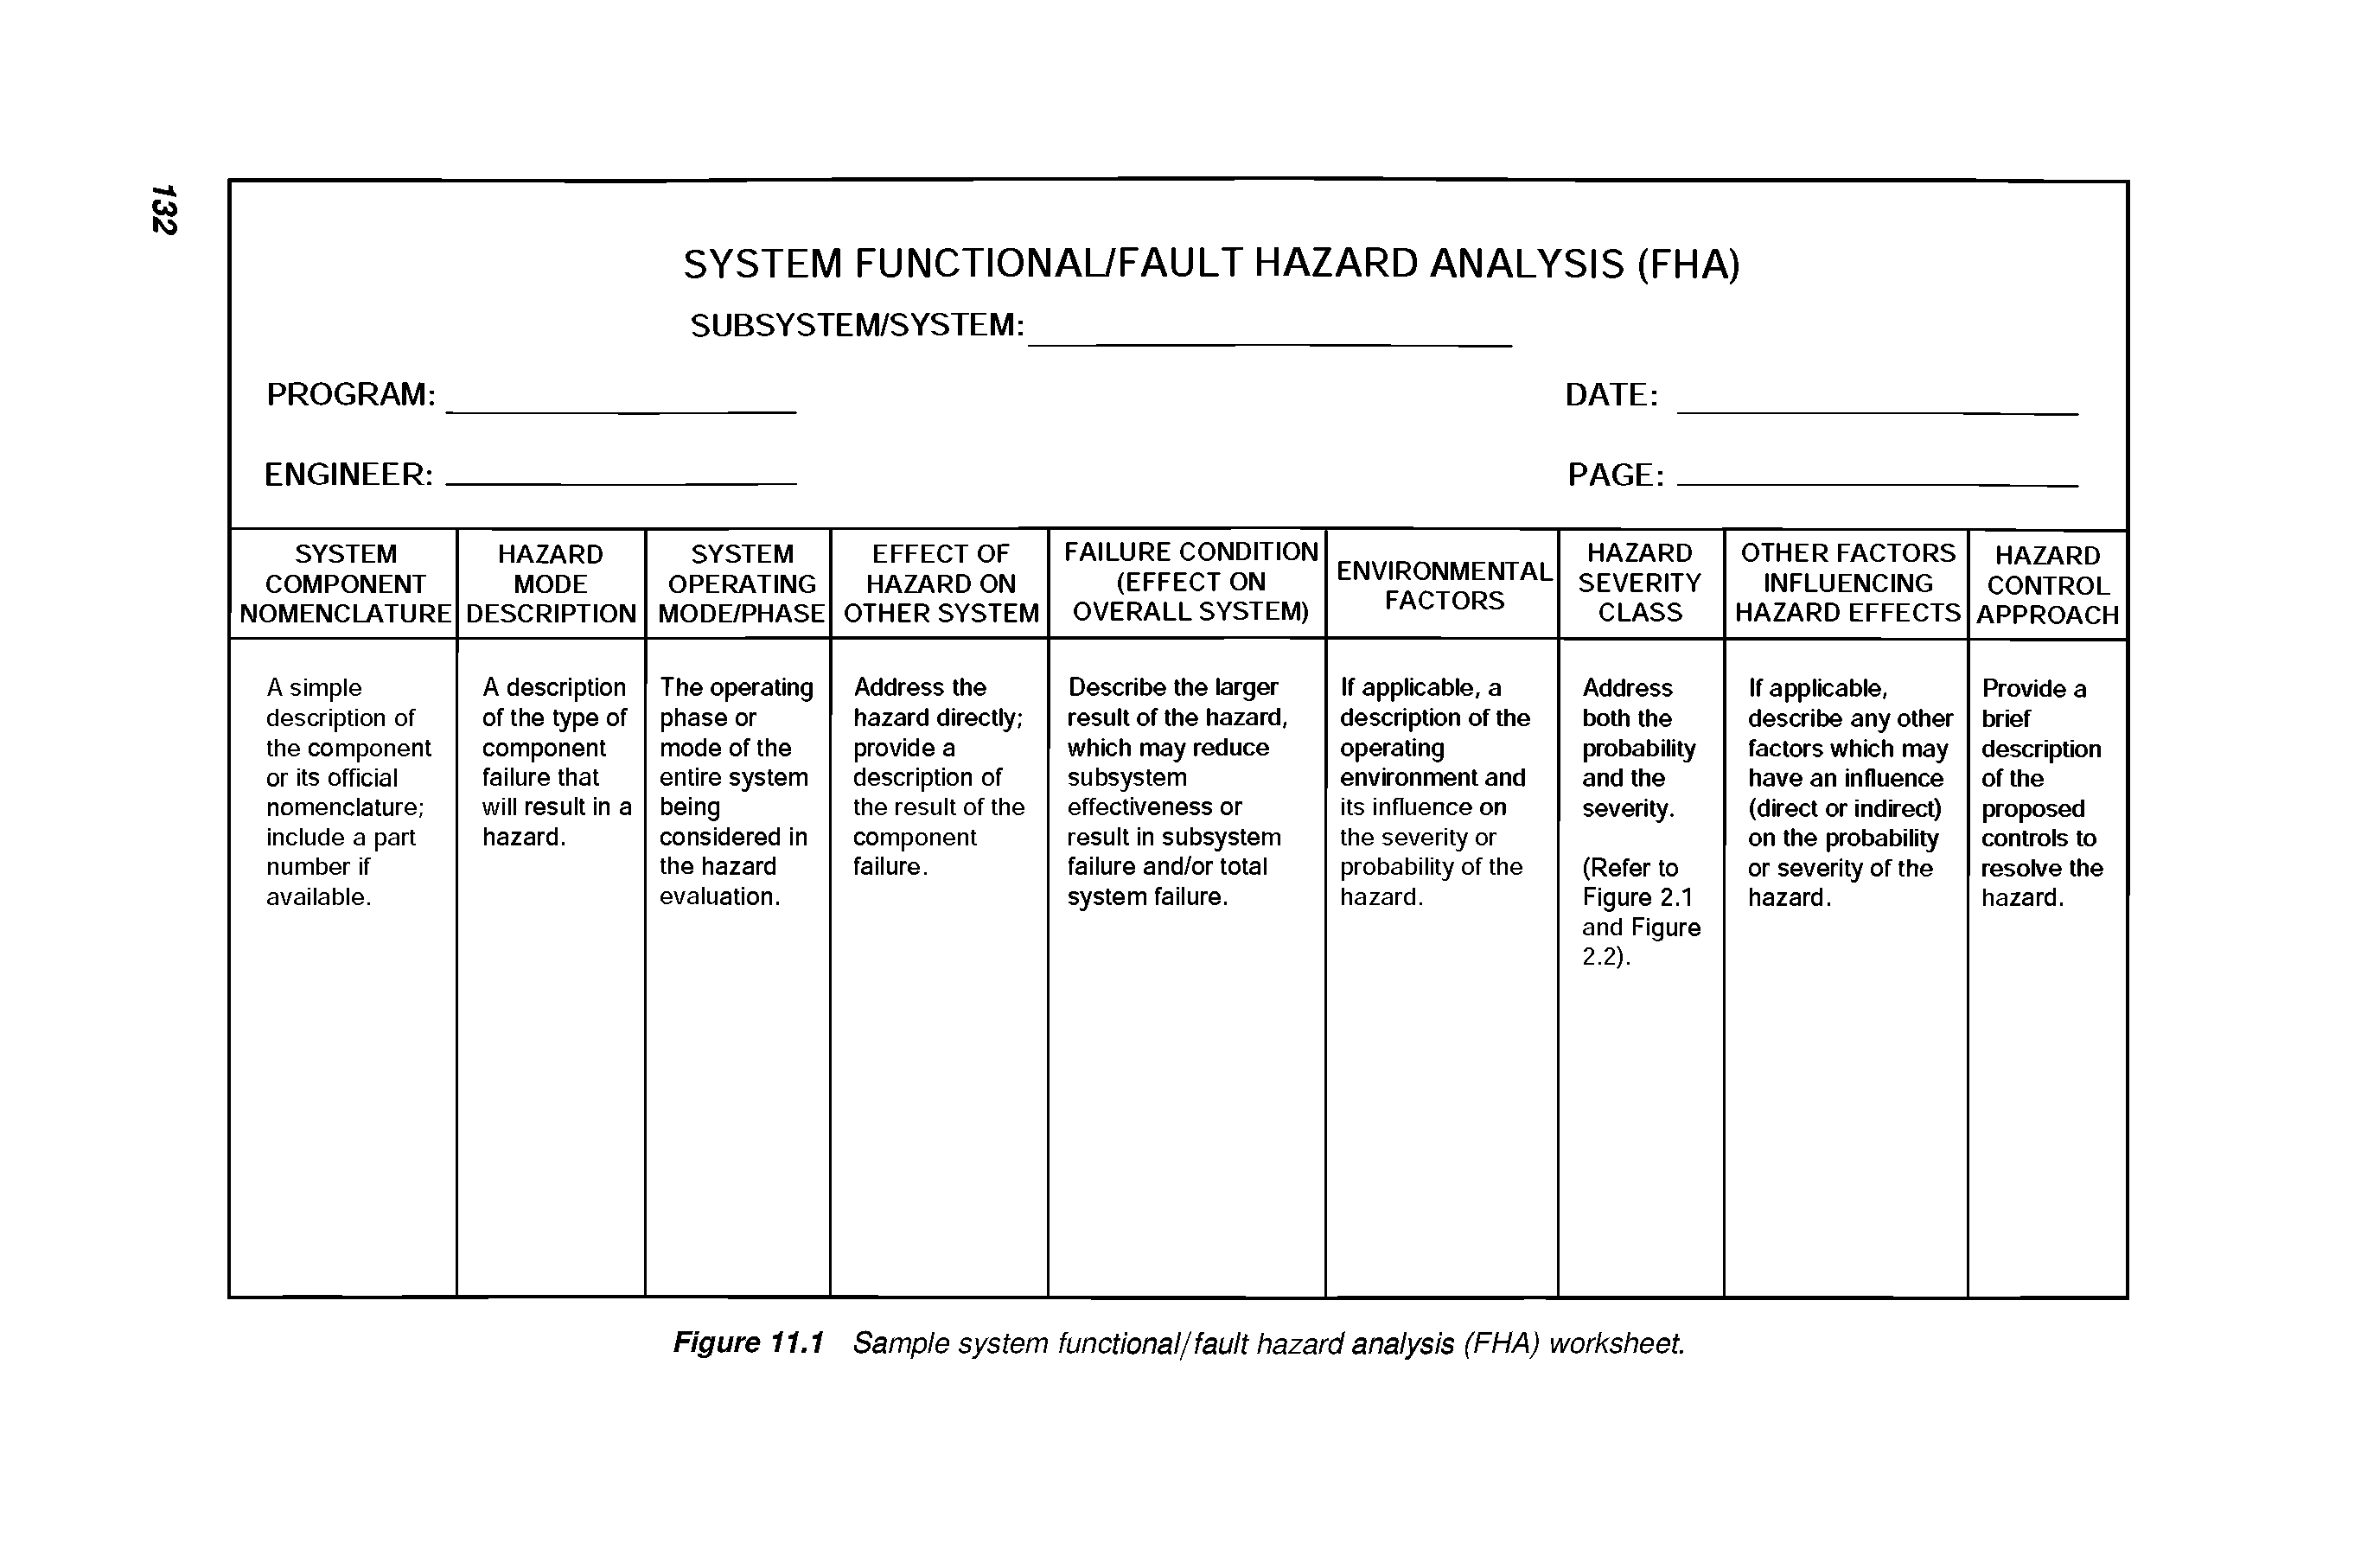 Figure 11.1 Sample system functional/fault hazard analysis (FHA) worksheet.